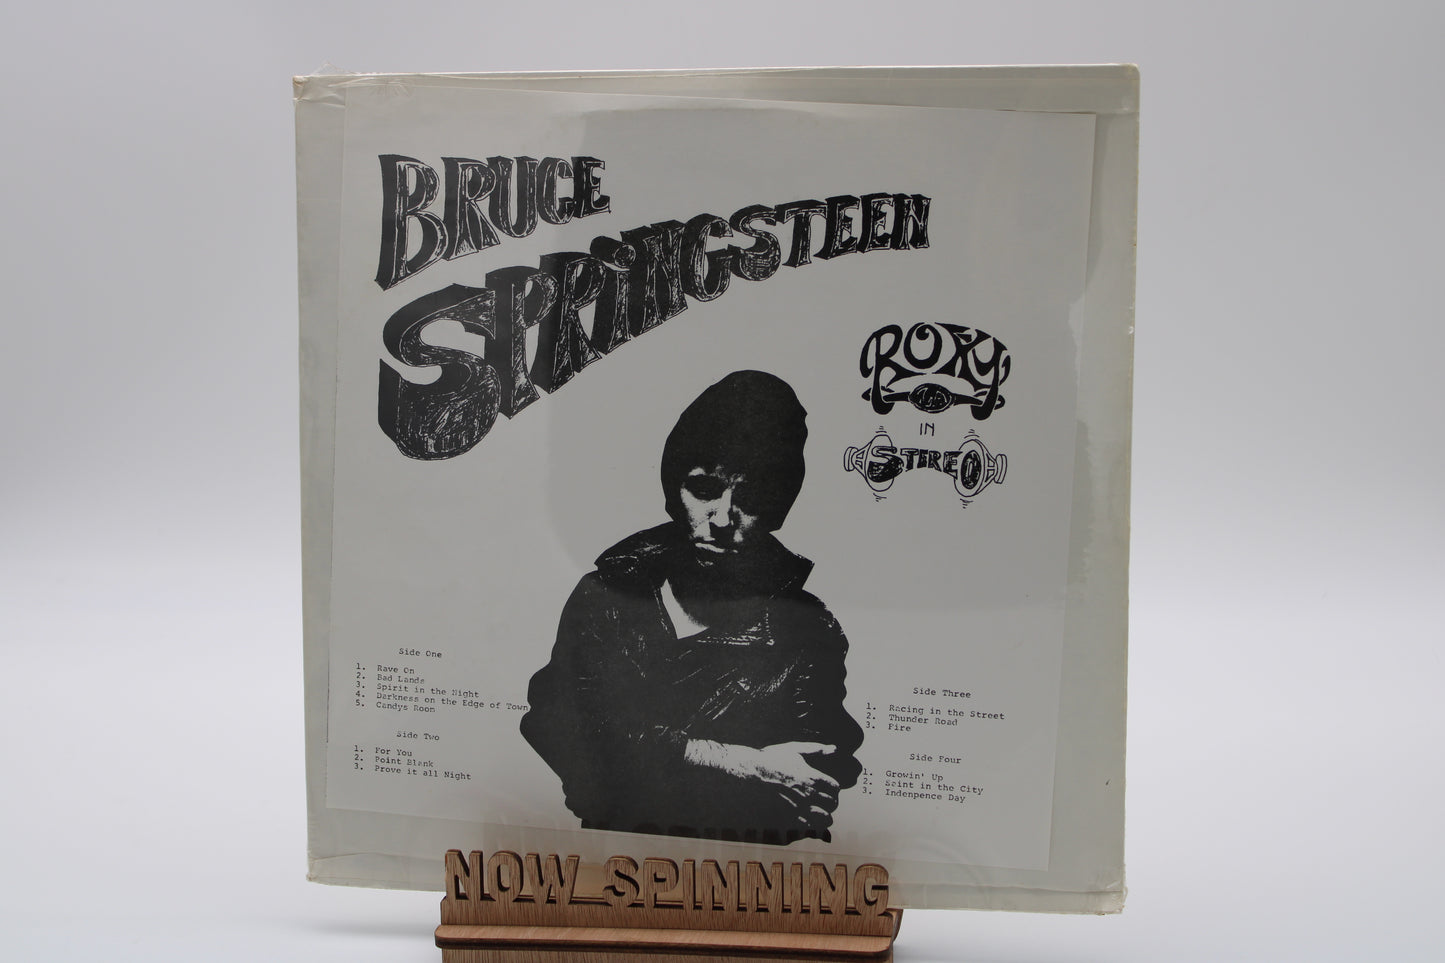 Bruce Springsteen - SEALED - ROXY LA IN STEREO - Live July 7, 1978 - 2 LP Vinyl Records - BLV